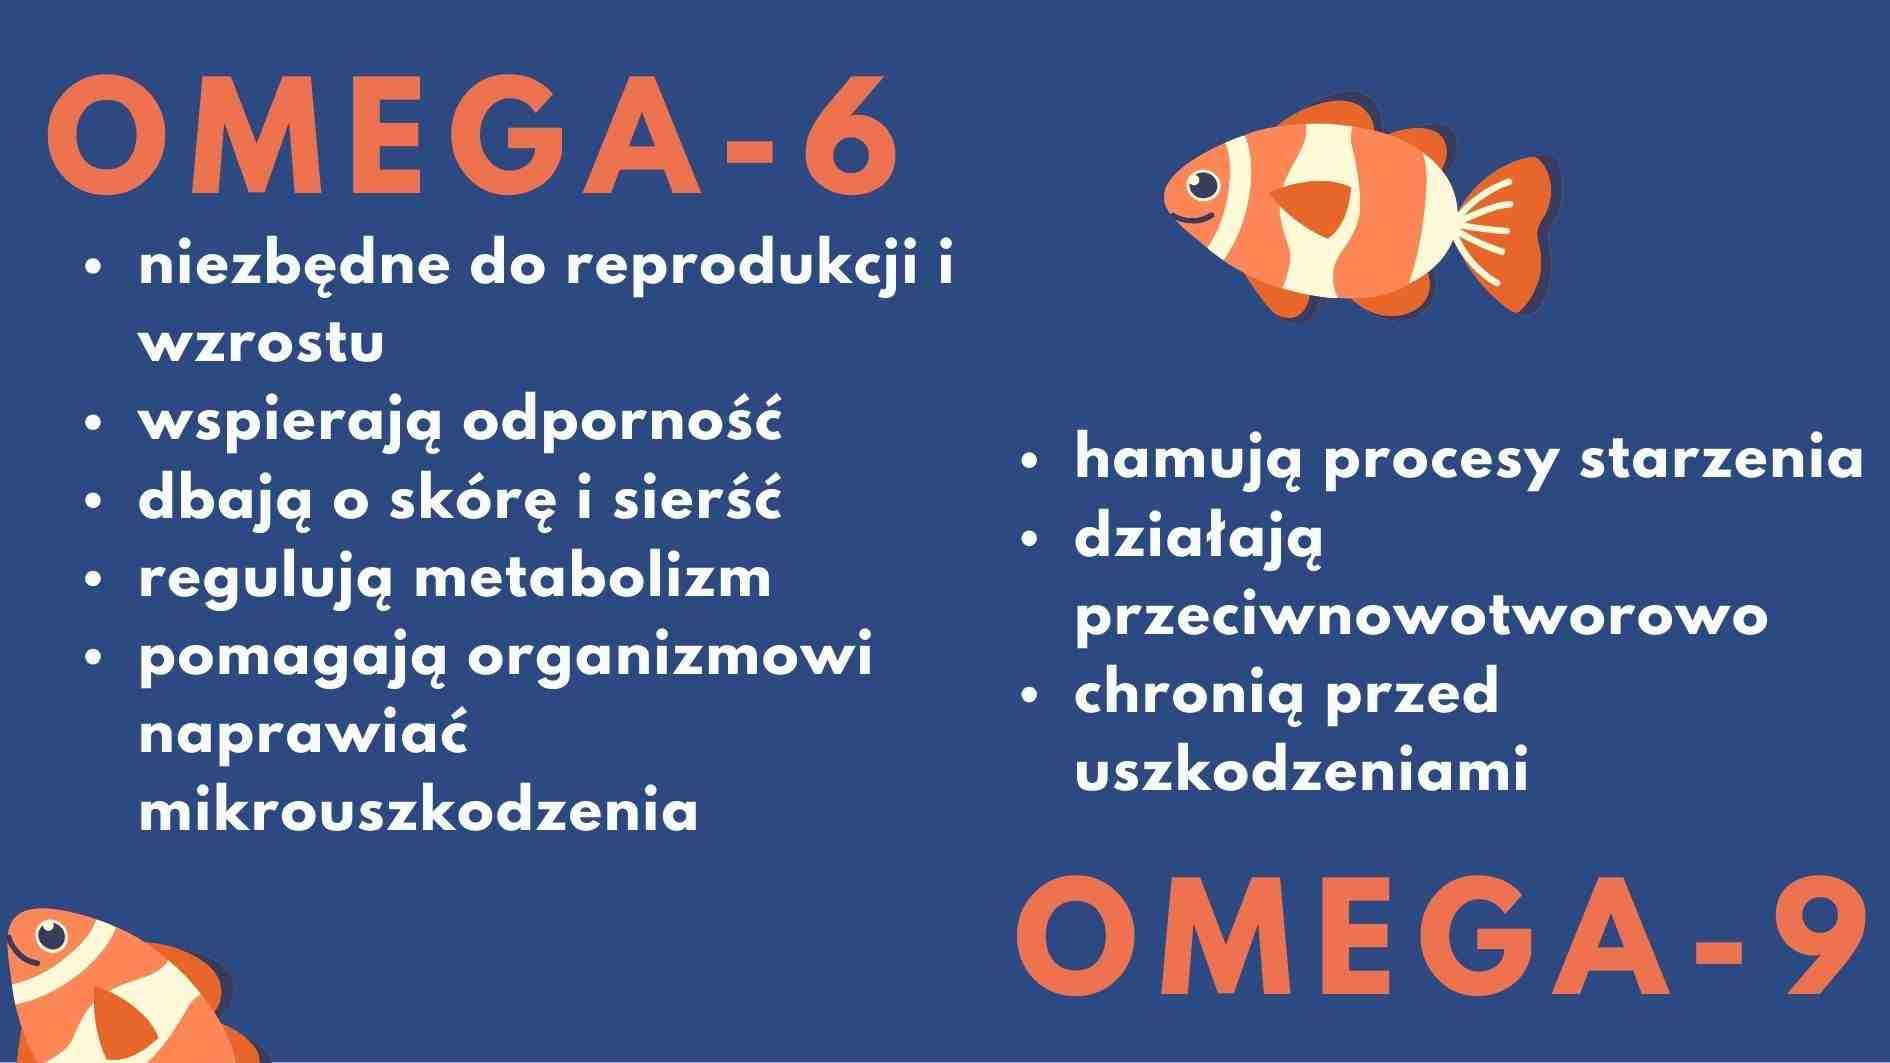 Omega 6 i 9